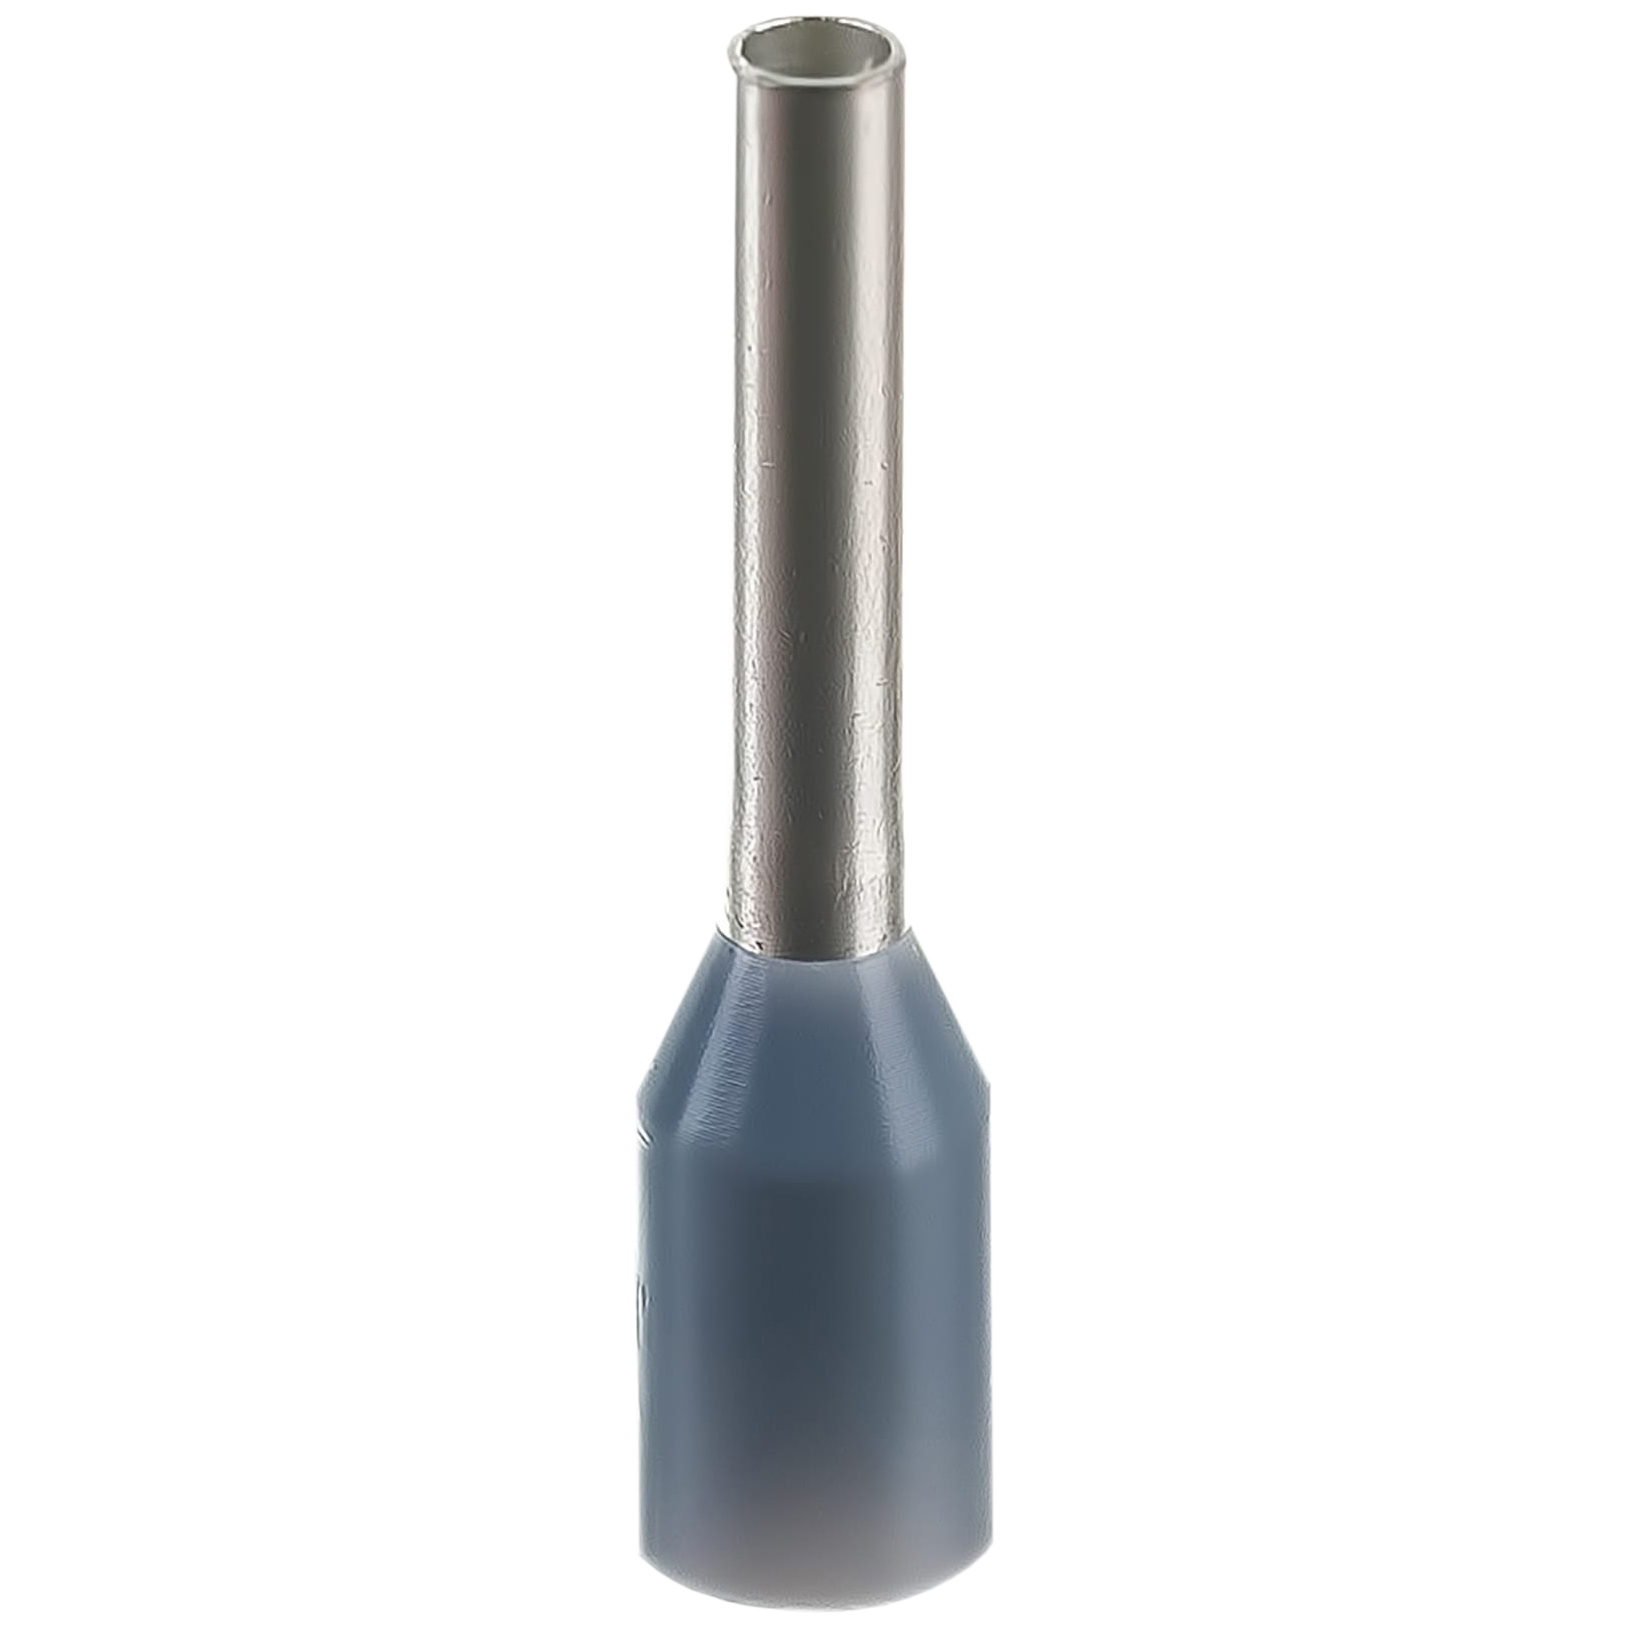 Klauke Втулочный наконечник 0,75мм2, 8мм цвет по DIN46228ч.4 - серый klk4708